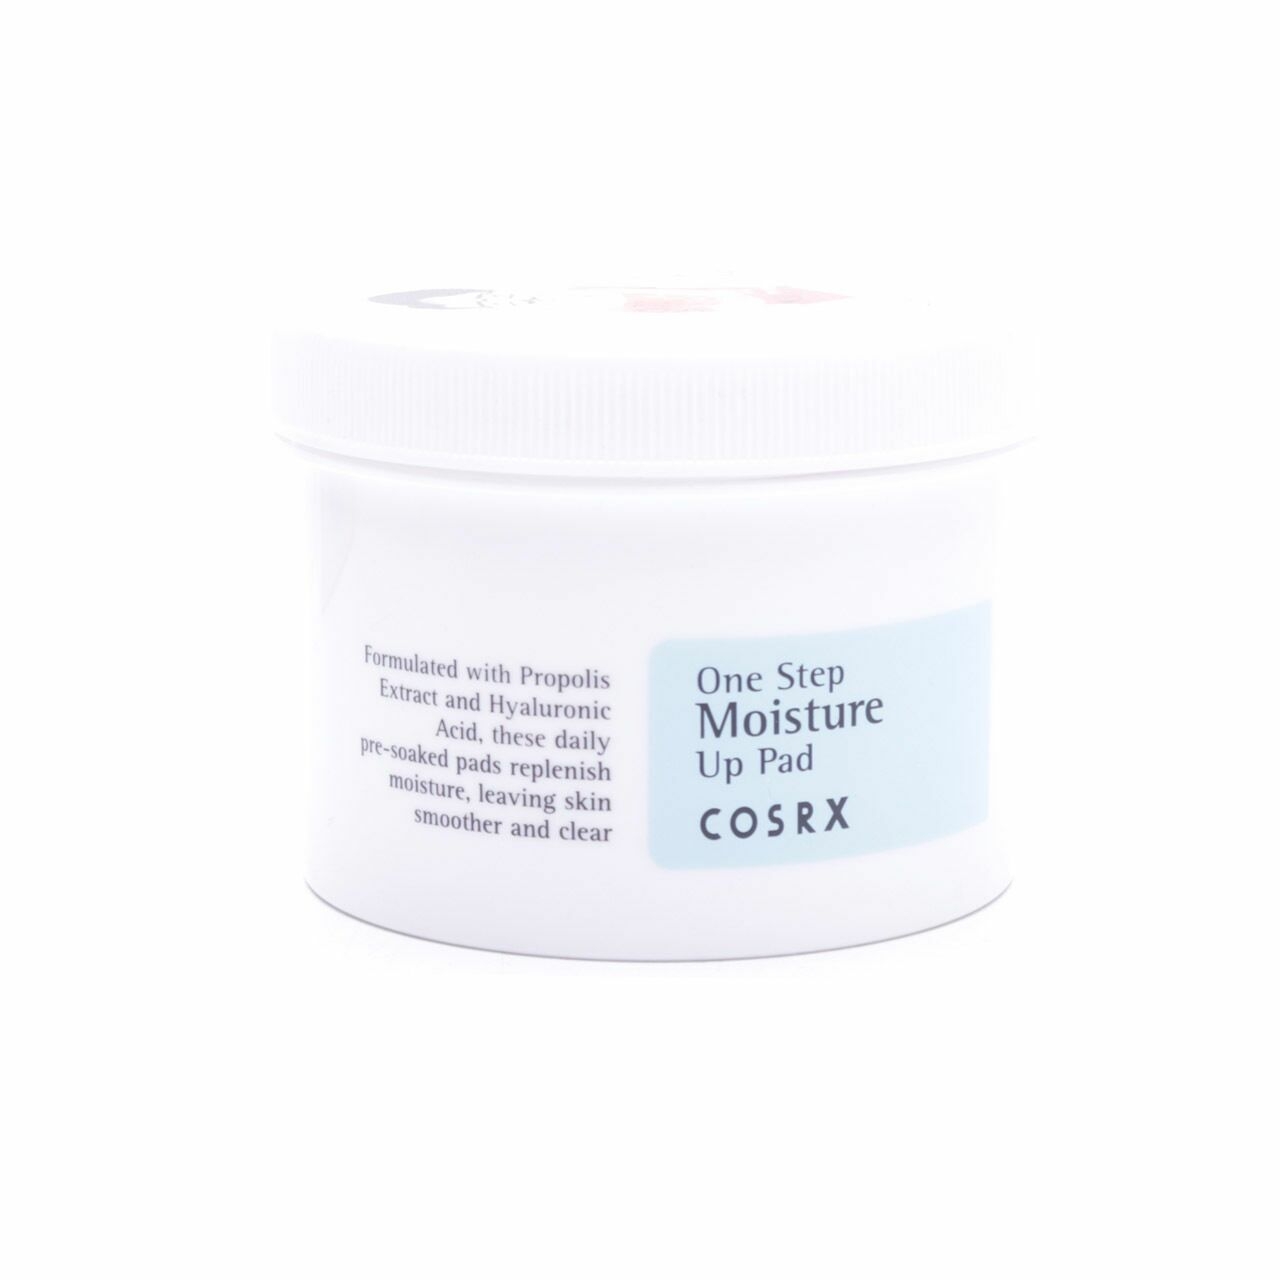 Cosrx One Step Moisture Up Pad Skin Care